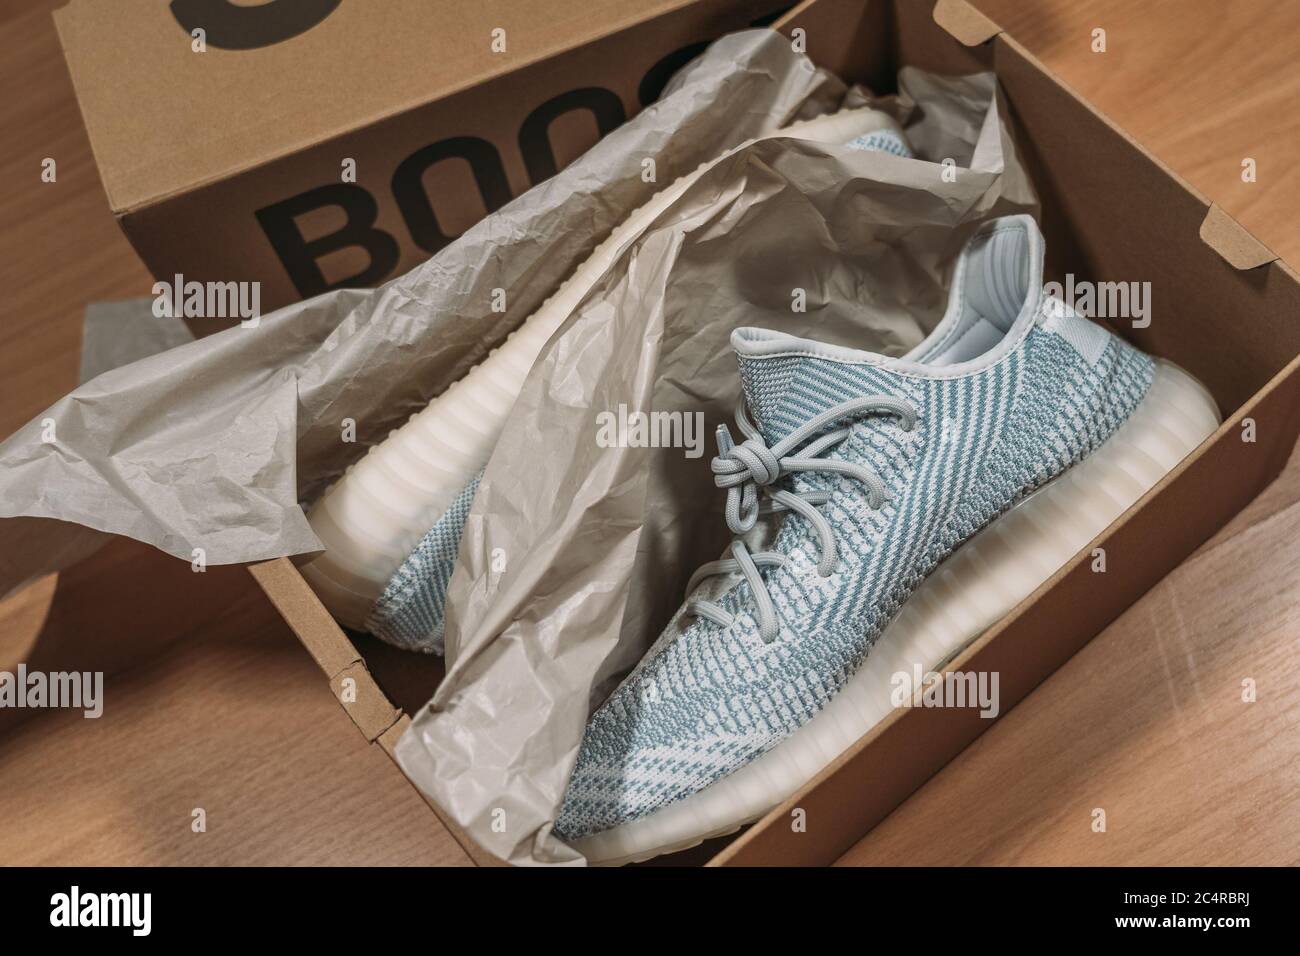 Moskau, Russland - Juni 2020 : Adidas Yeezy Boost 350 V2 Cloud White - berühmte Limited Collection Fashion Sneakers von Kanye West und Adidas Collaboration, trendige Sportschuhe. Stockfoto